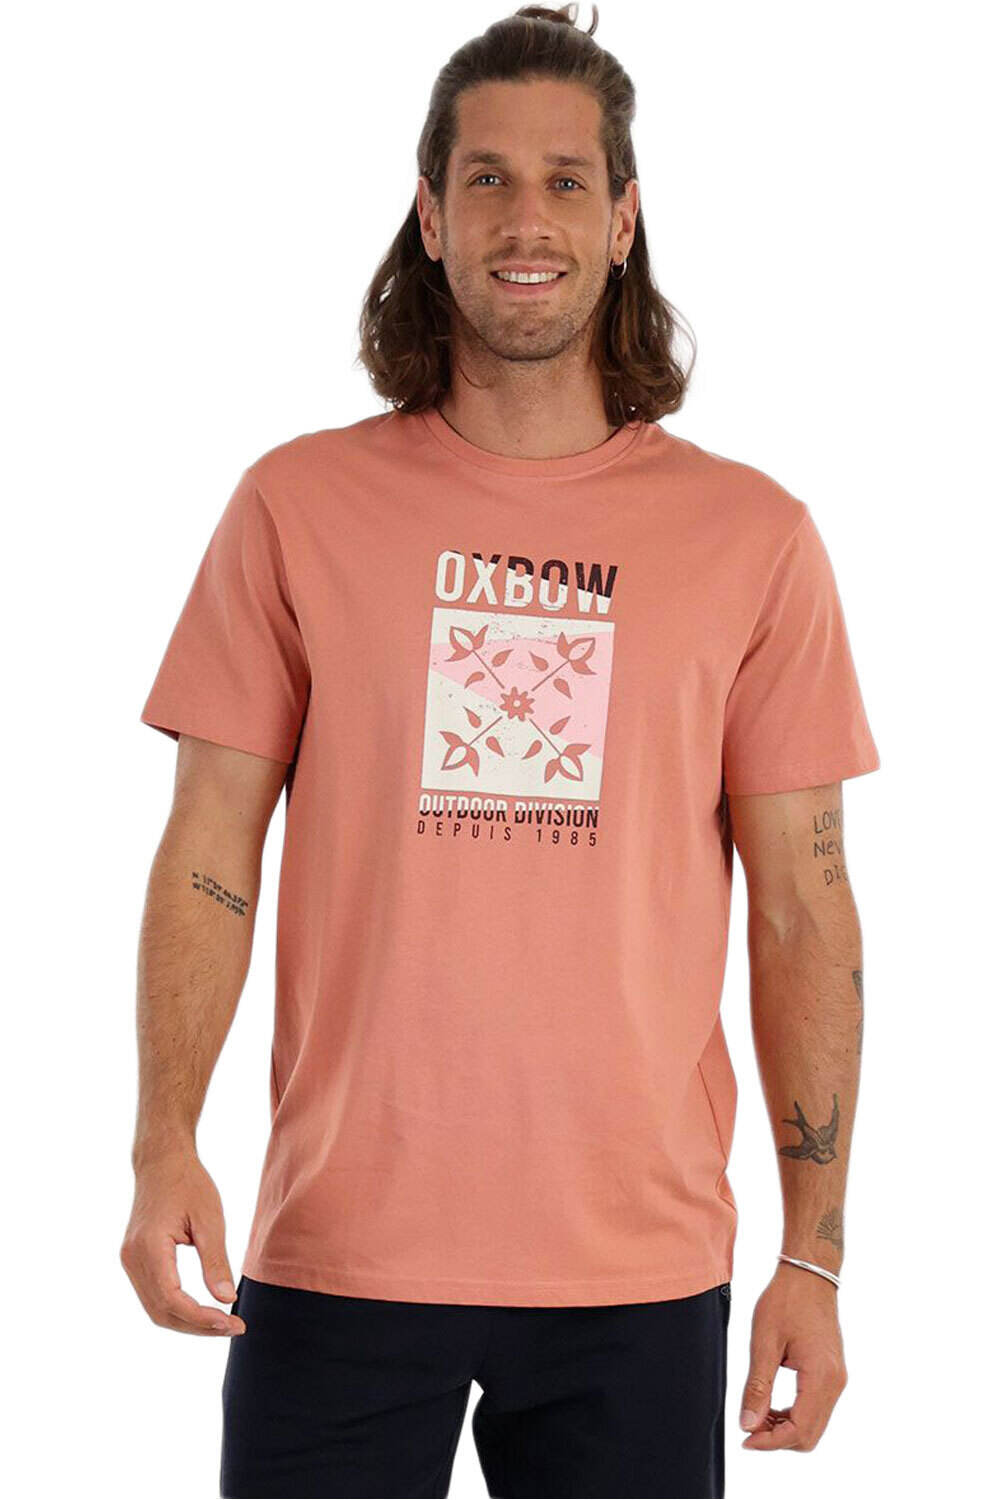 Oxbow camiseta manga corta hombre P1TARCO tee shirt vista frontal